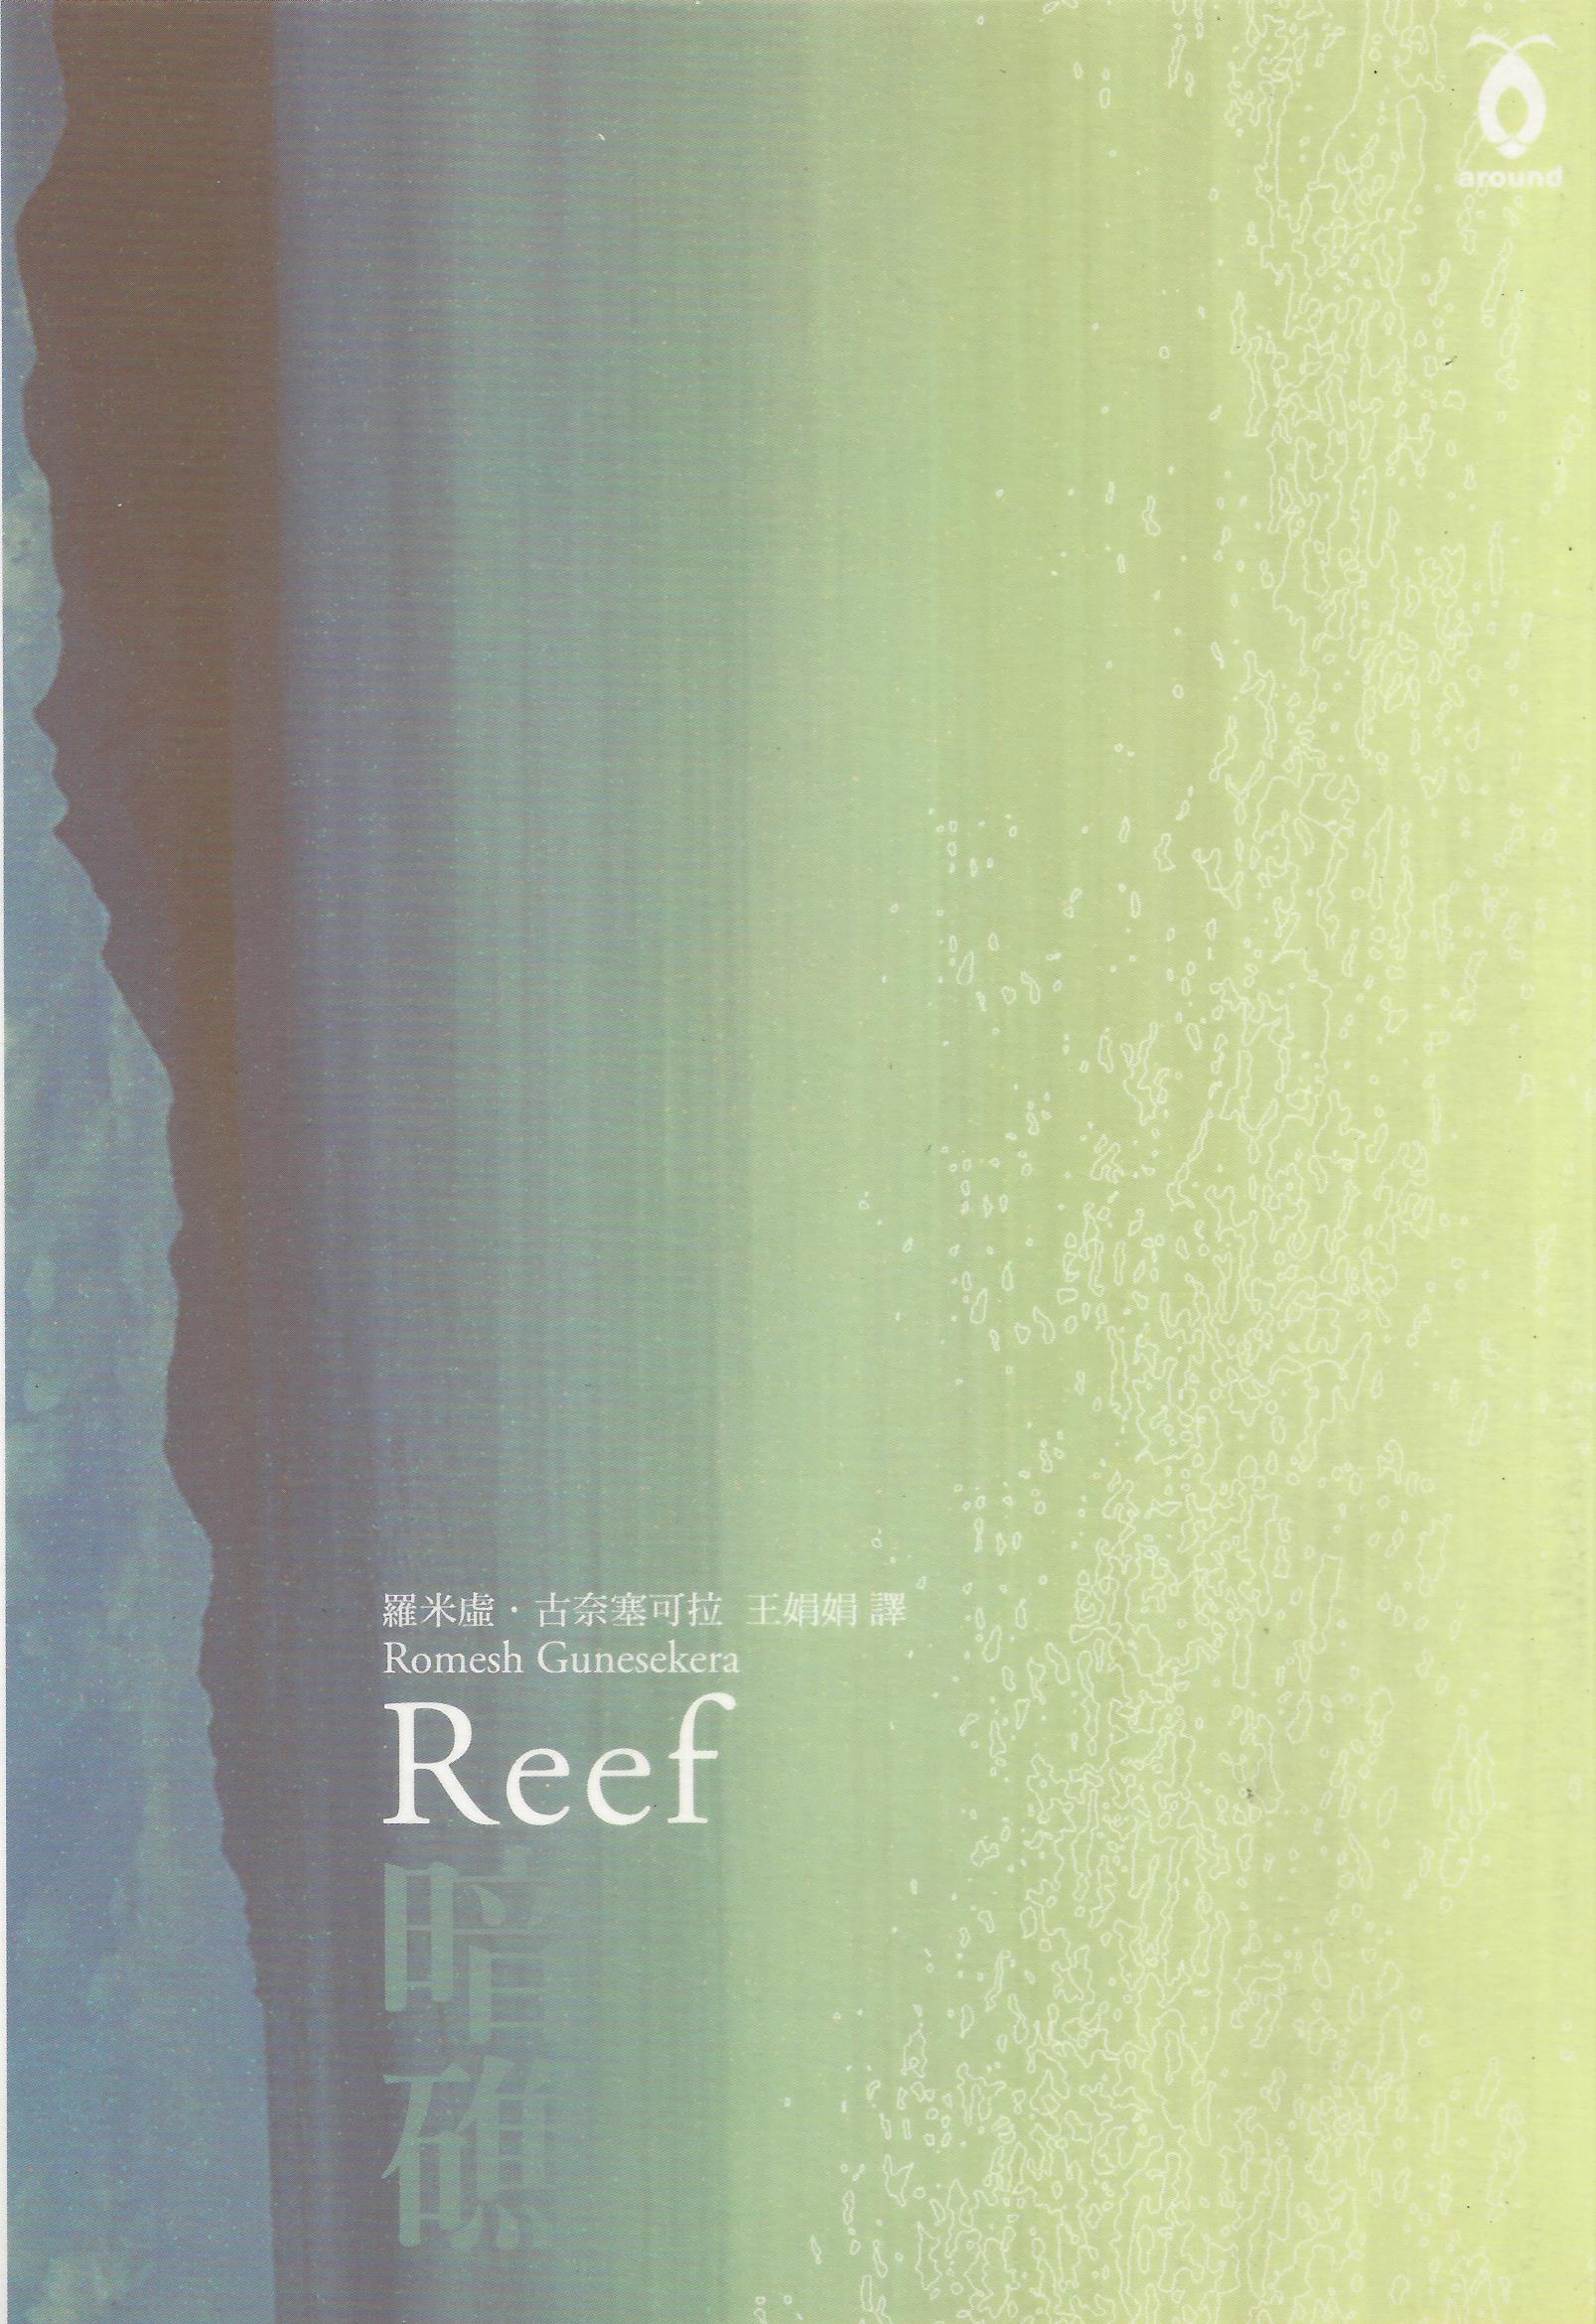 Reef Chinese.jpg